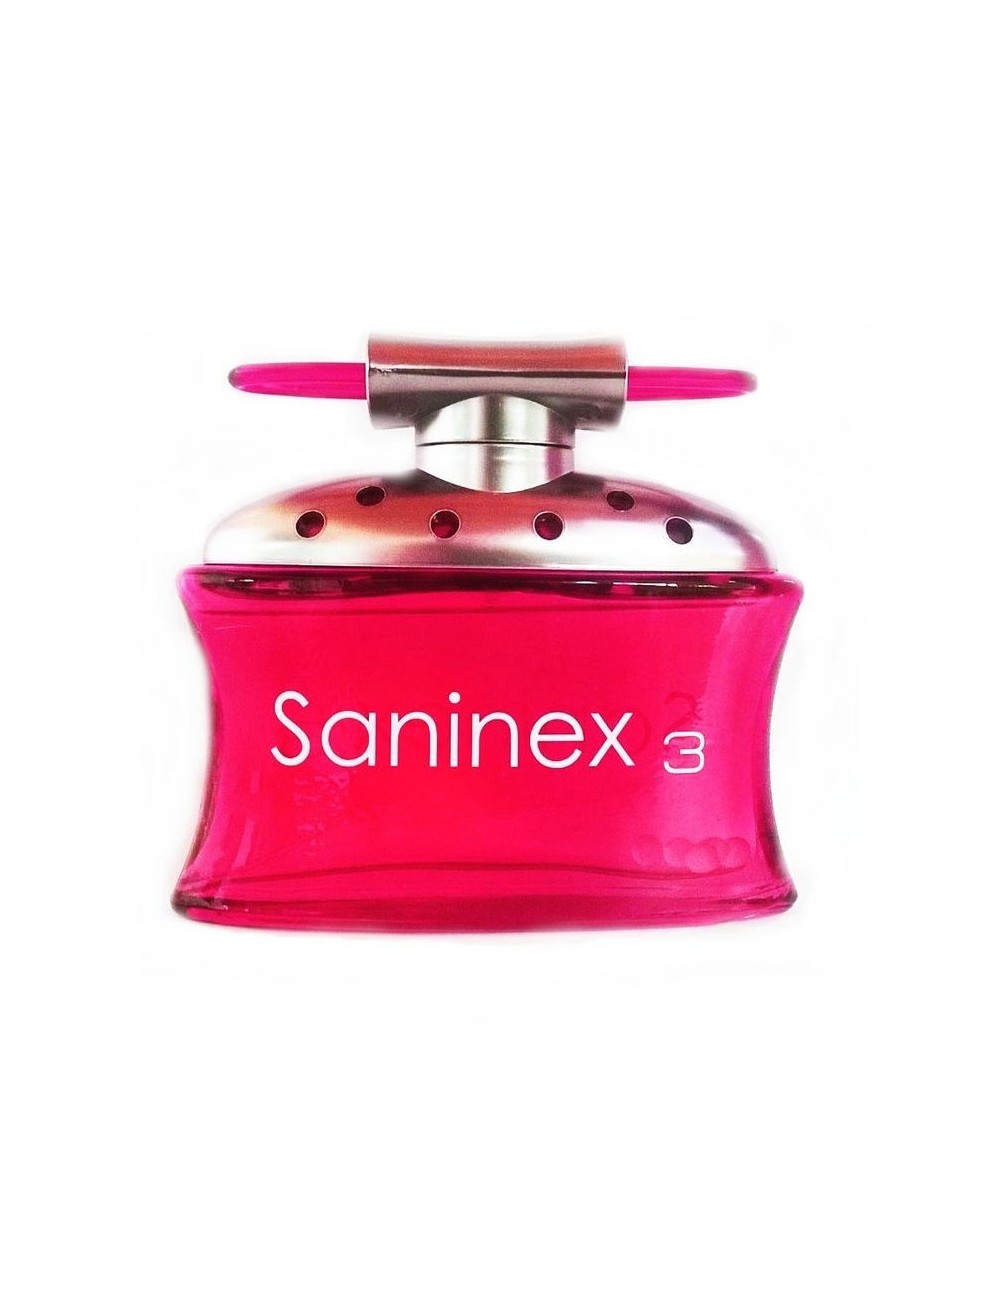 SANINEX 3 PARFUM PHEROMONES UNISEXE 100ML - Parfum - Saninex Fragance